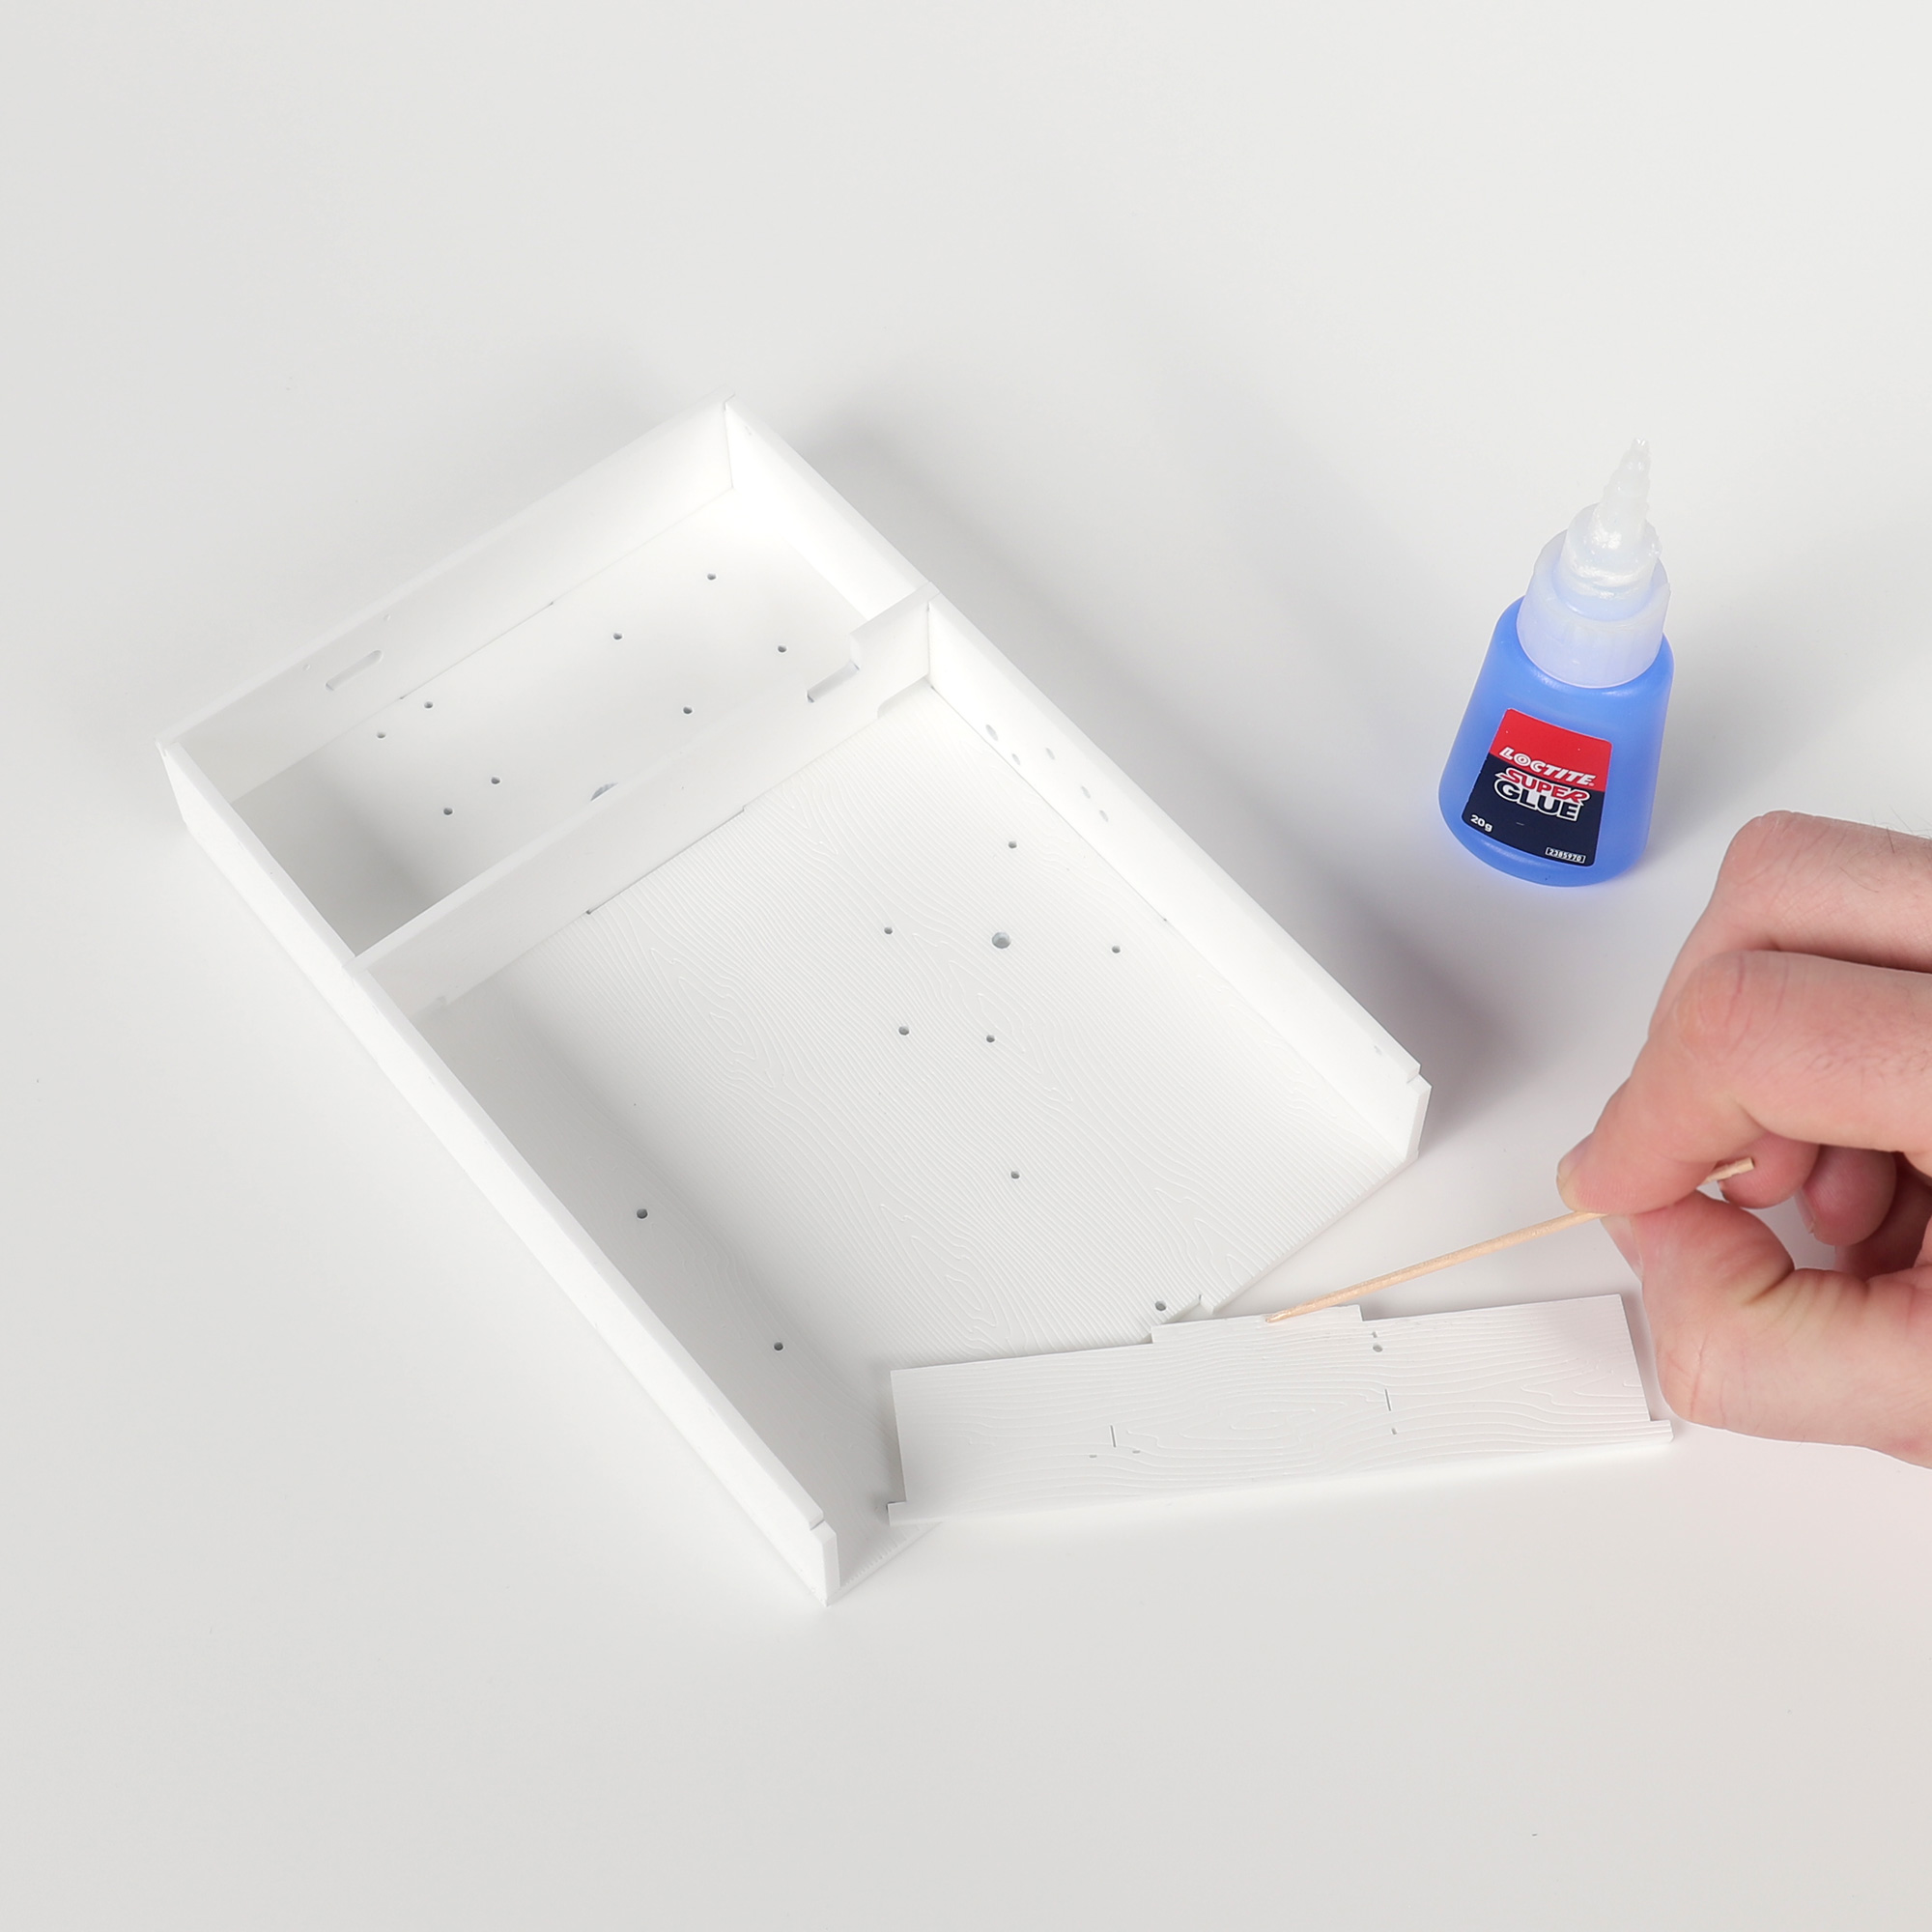 Applying glue to roof box tabs